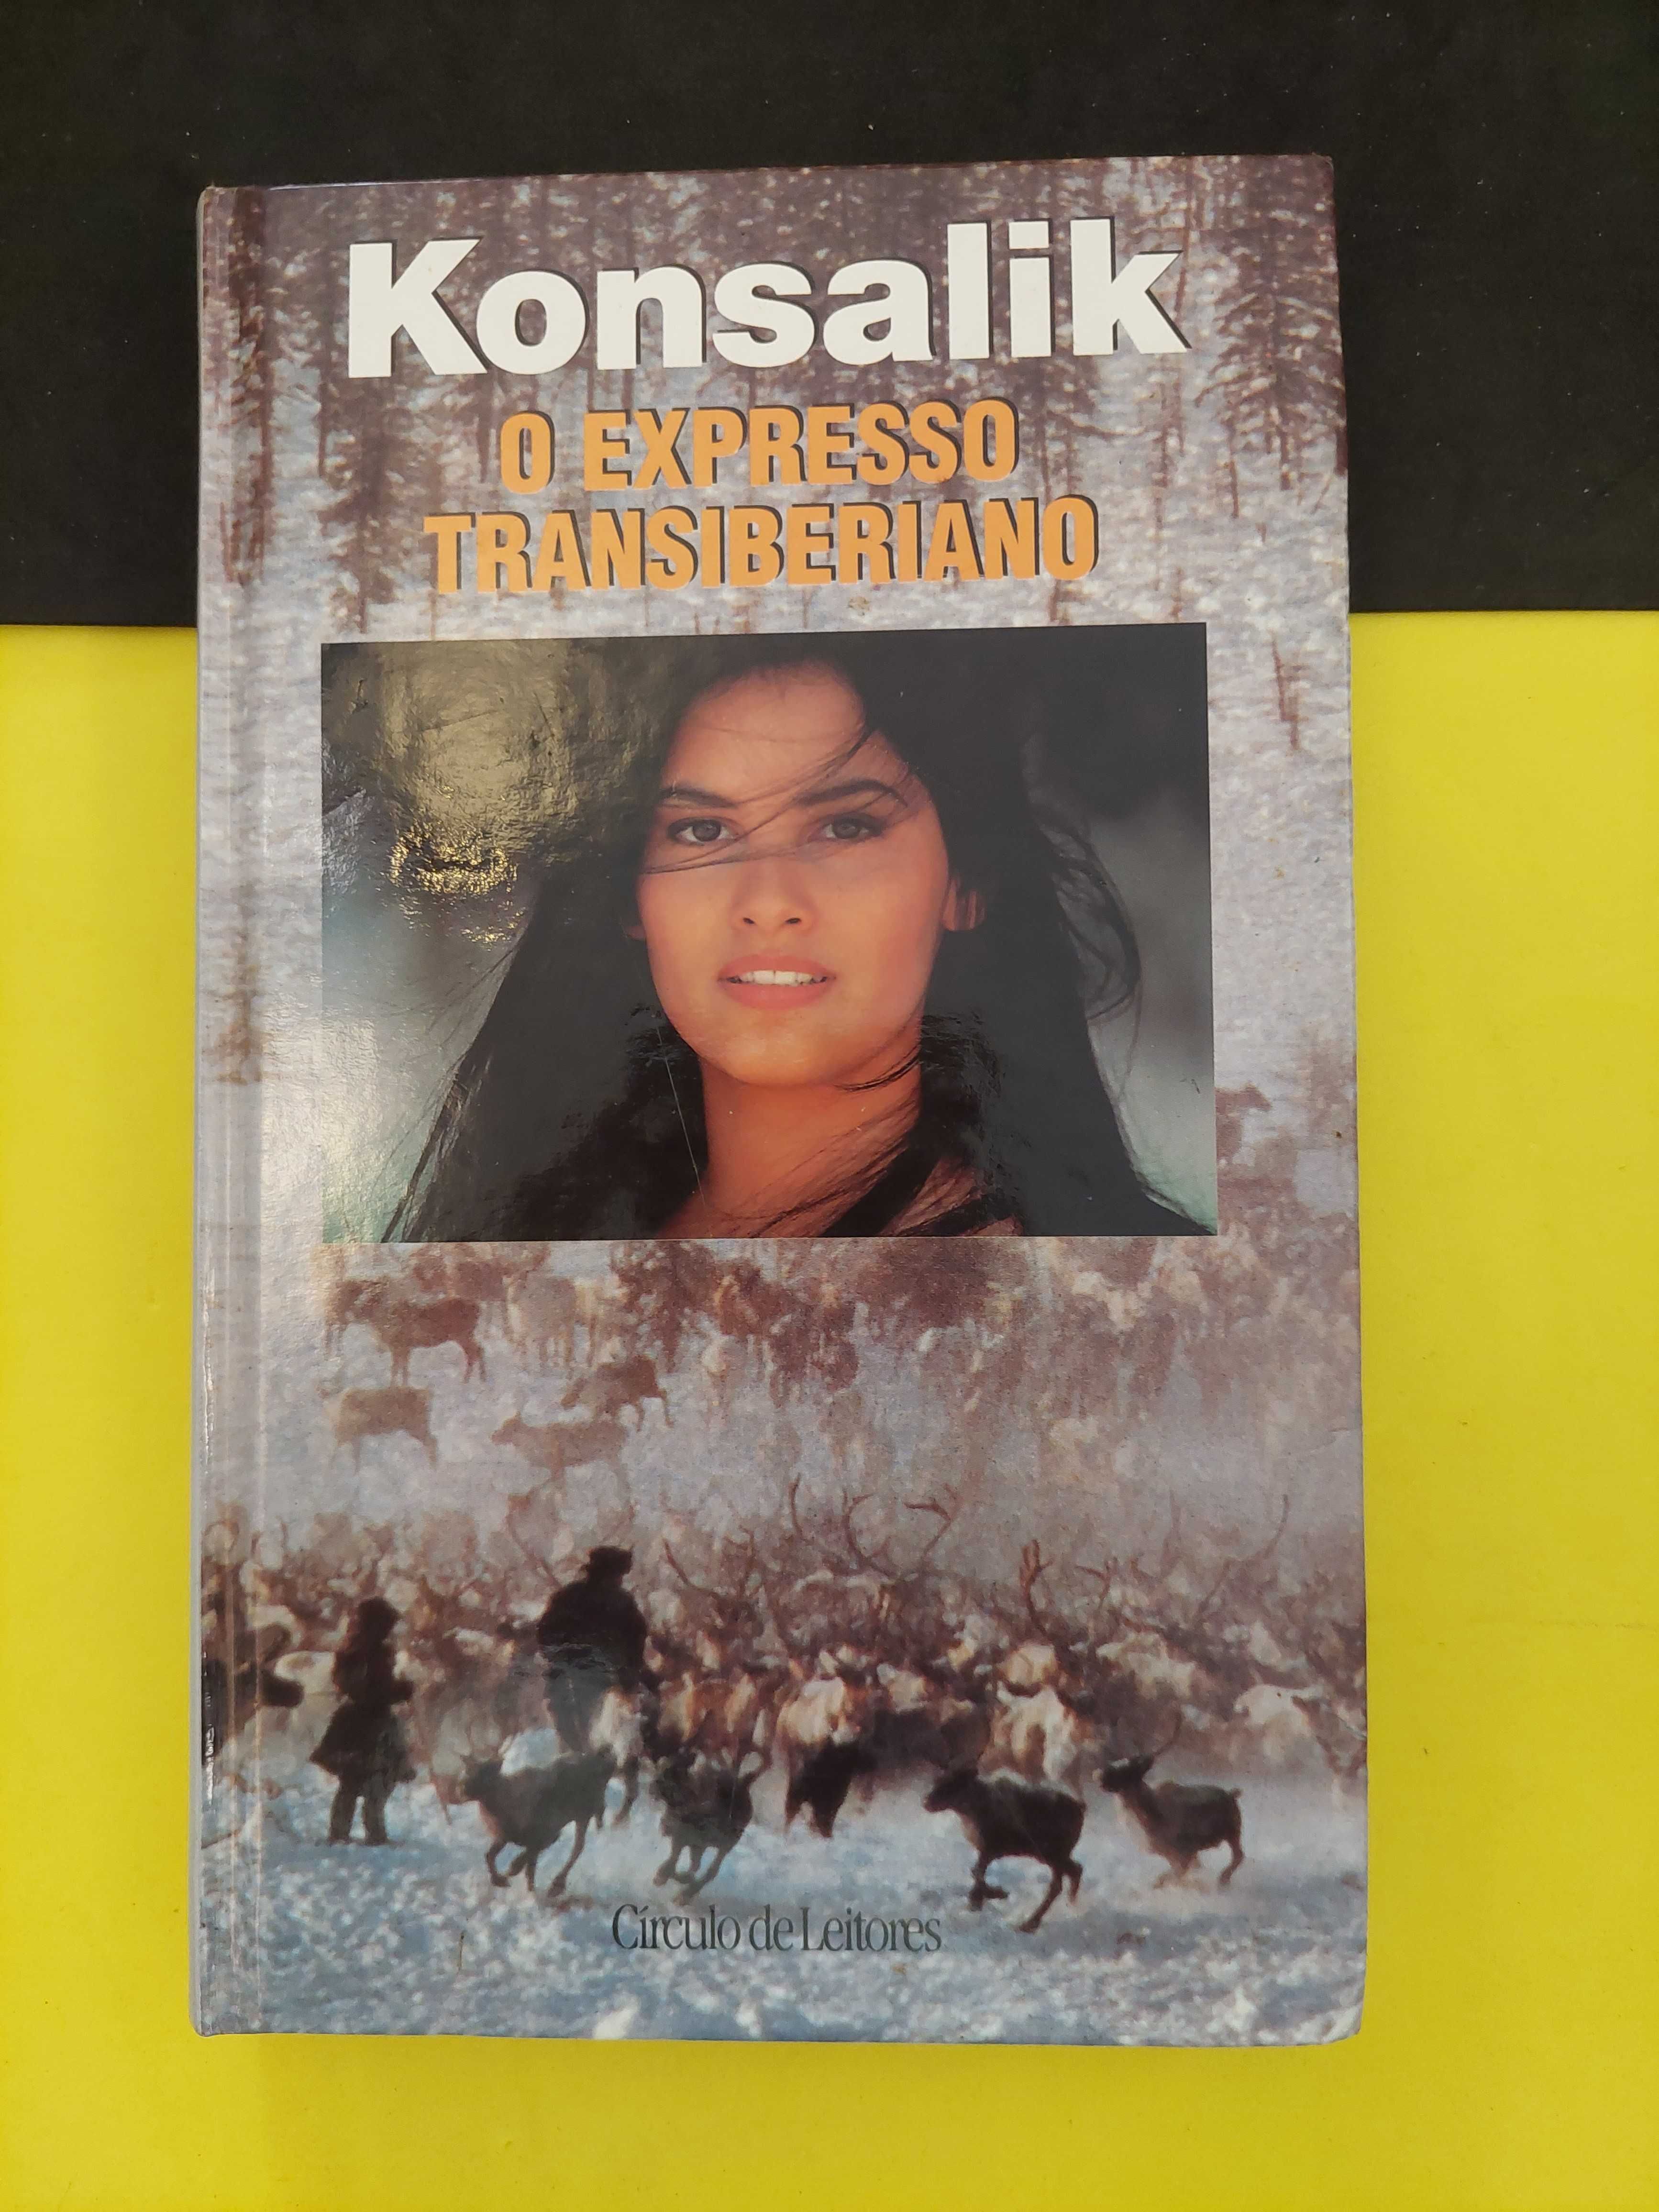 Konsalik - O Expresso Transiberiano